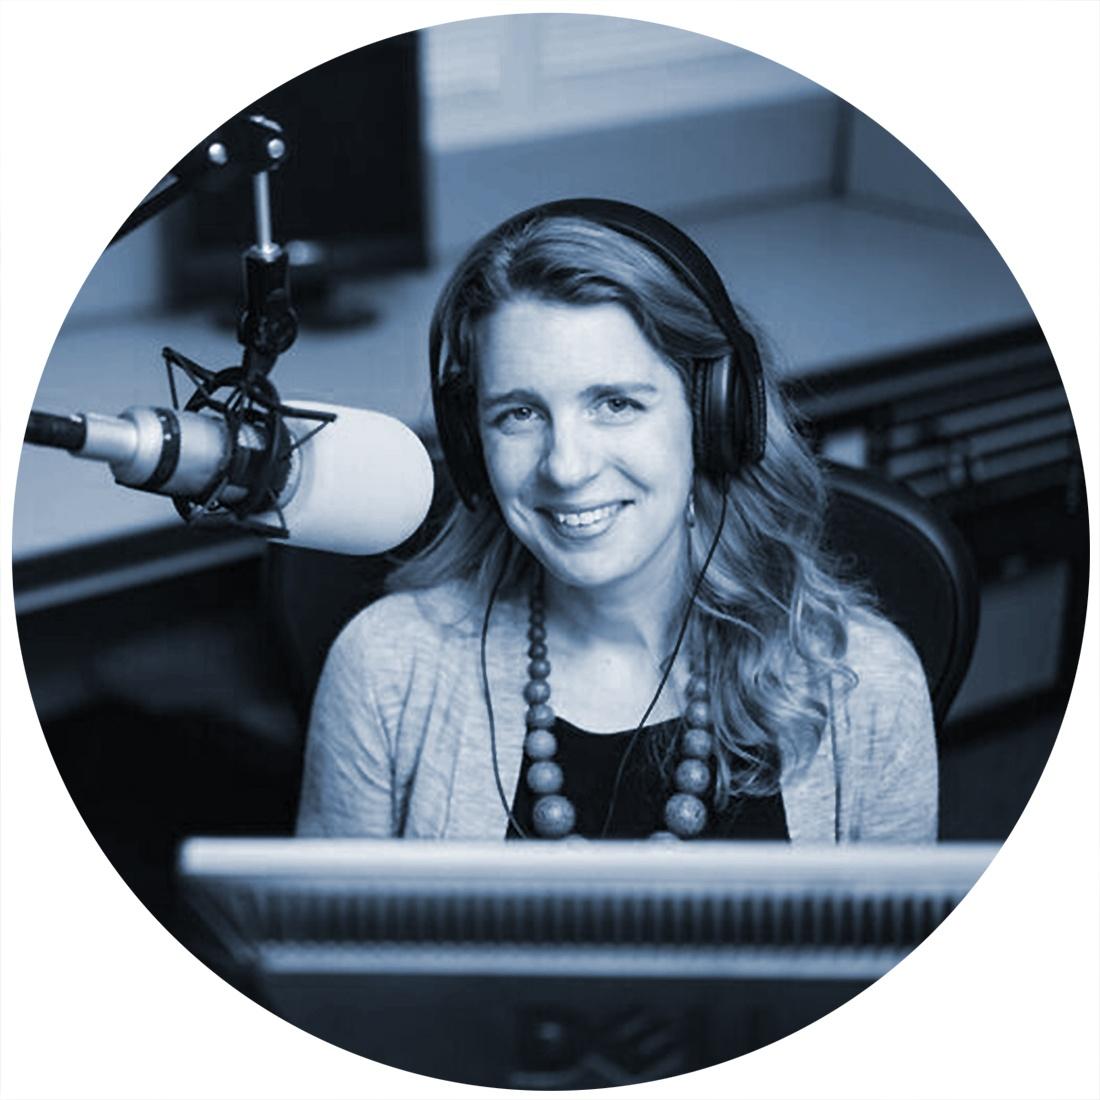 Andrea Smardon, host of More Than Half Podcast